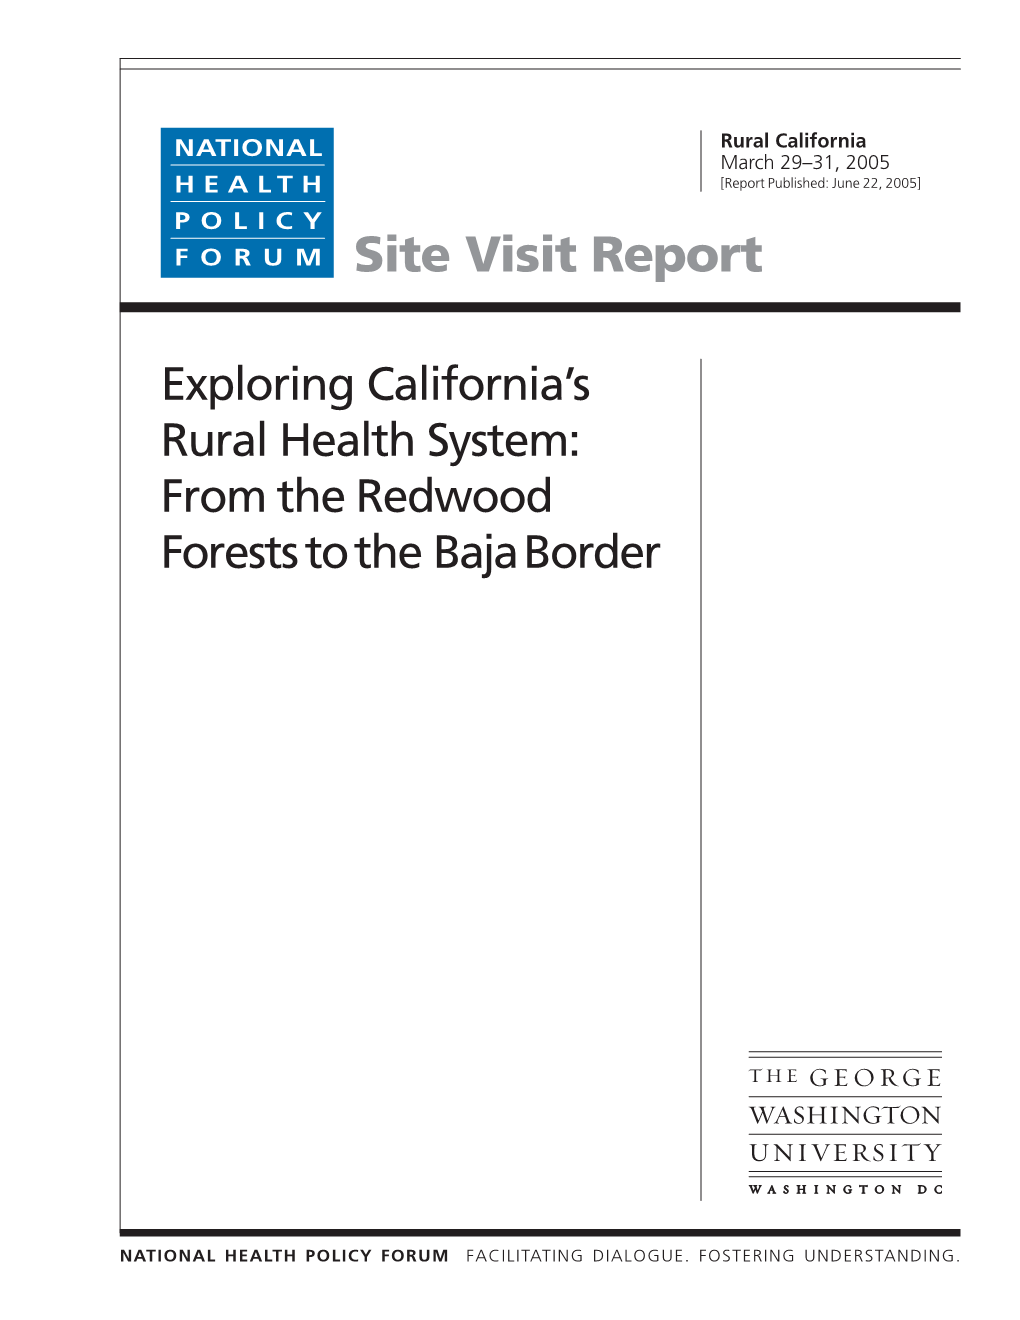 Site Visit Report: Exploring California's